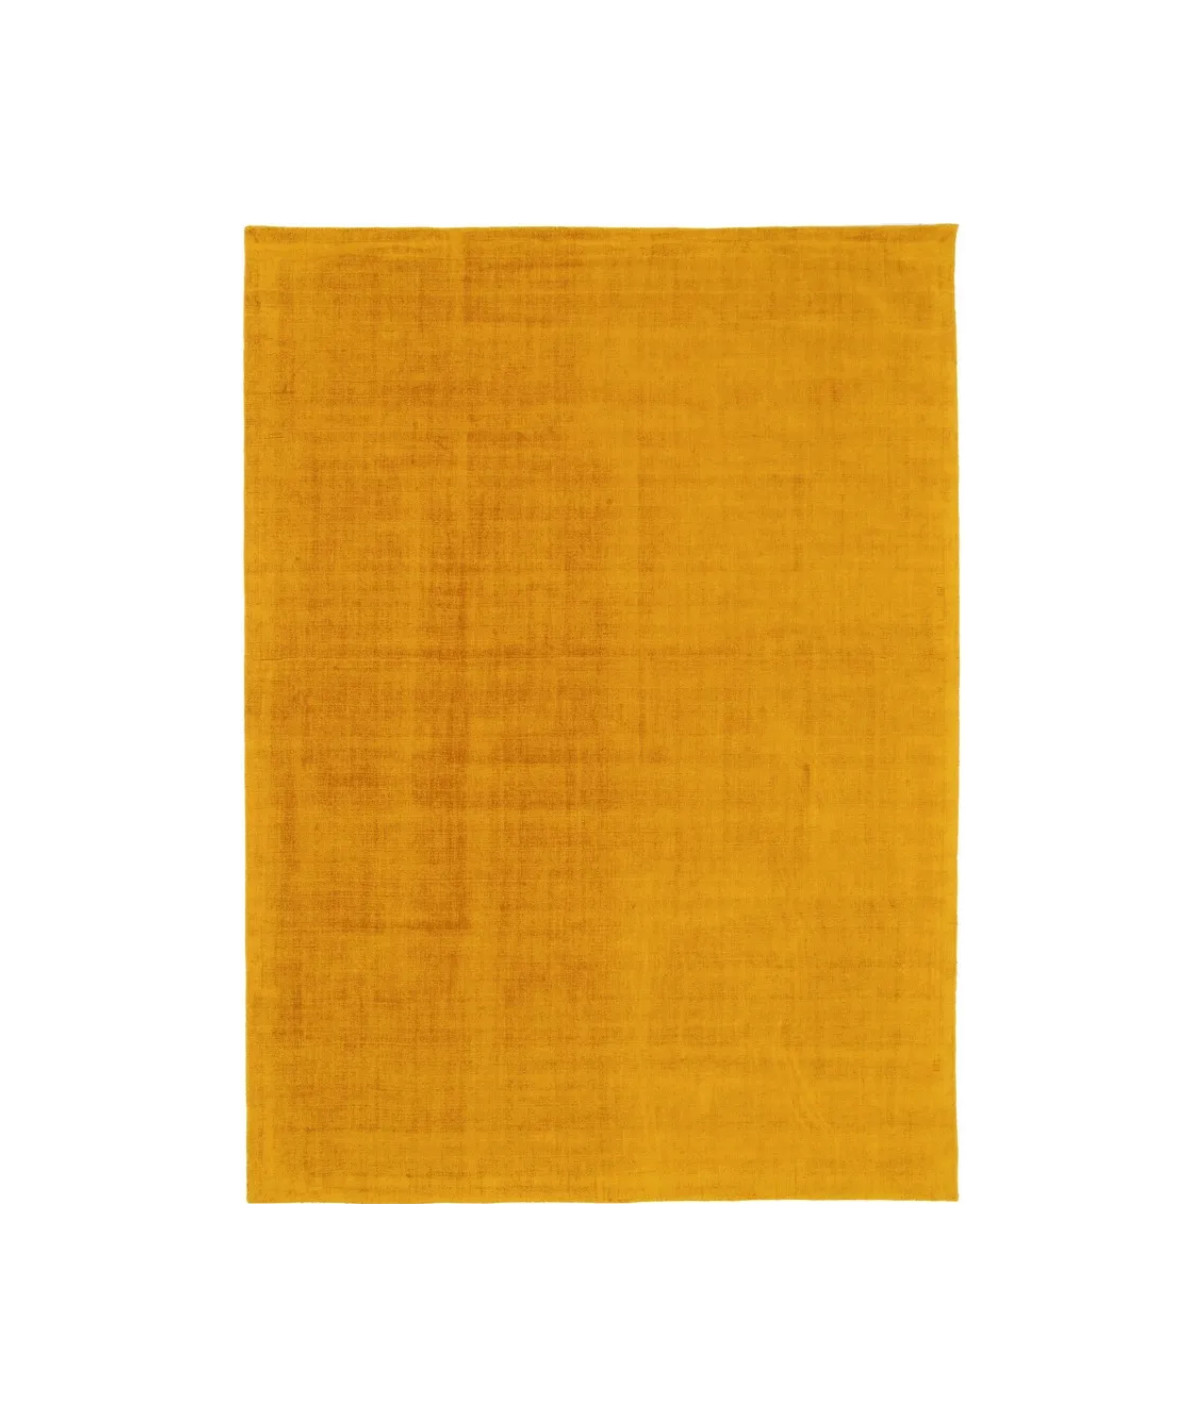 Tapis jaune polyester 250x350cm - Guelph - Yesdeko